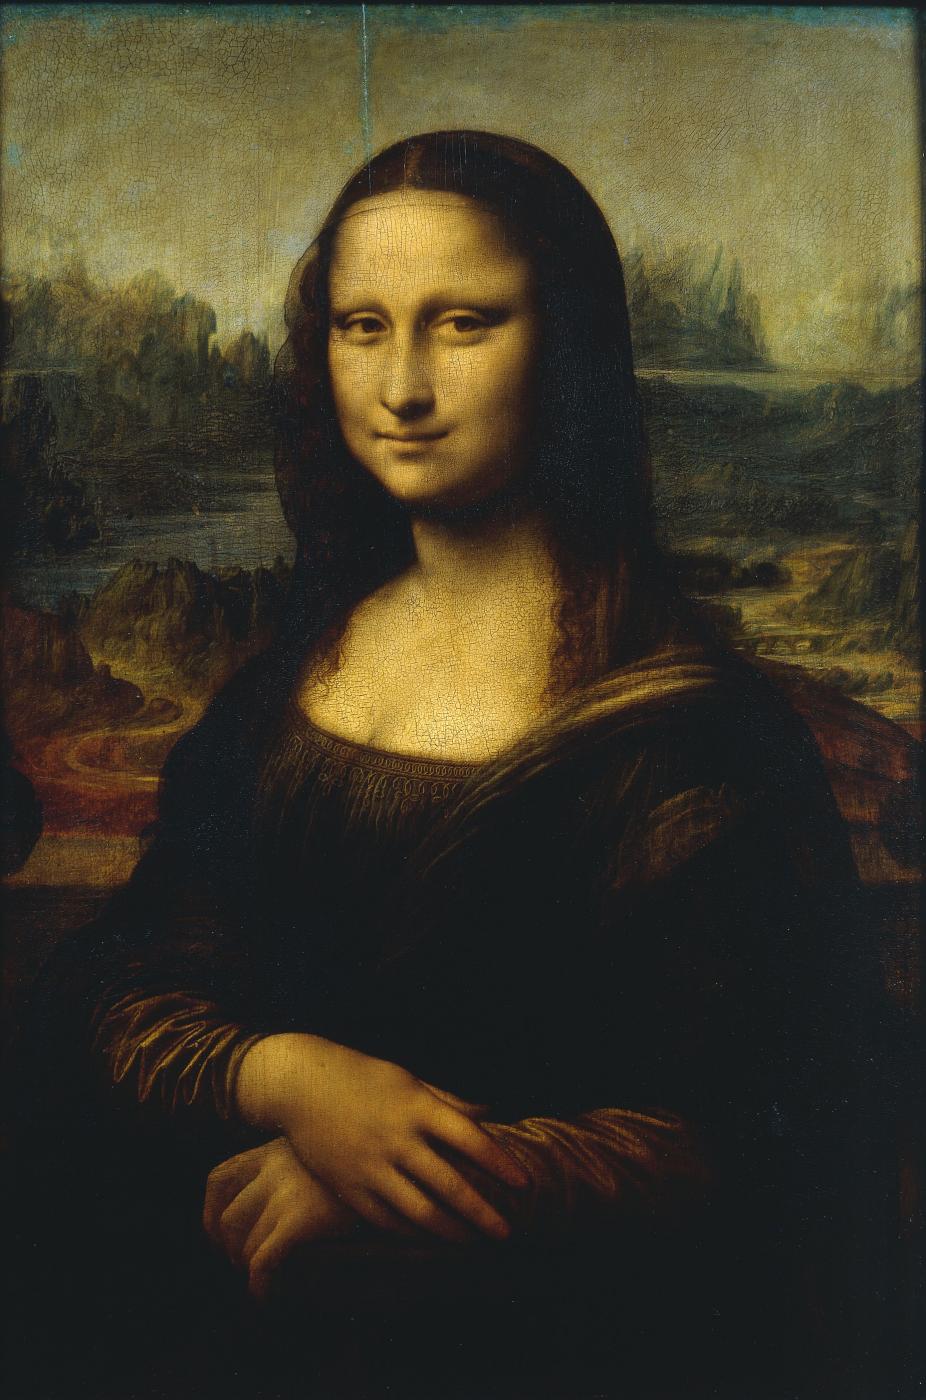 Leonardo e la Gioconda: svelato il segreto del sorriso della monna Lisa